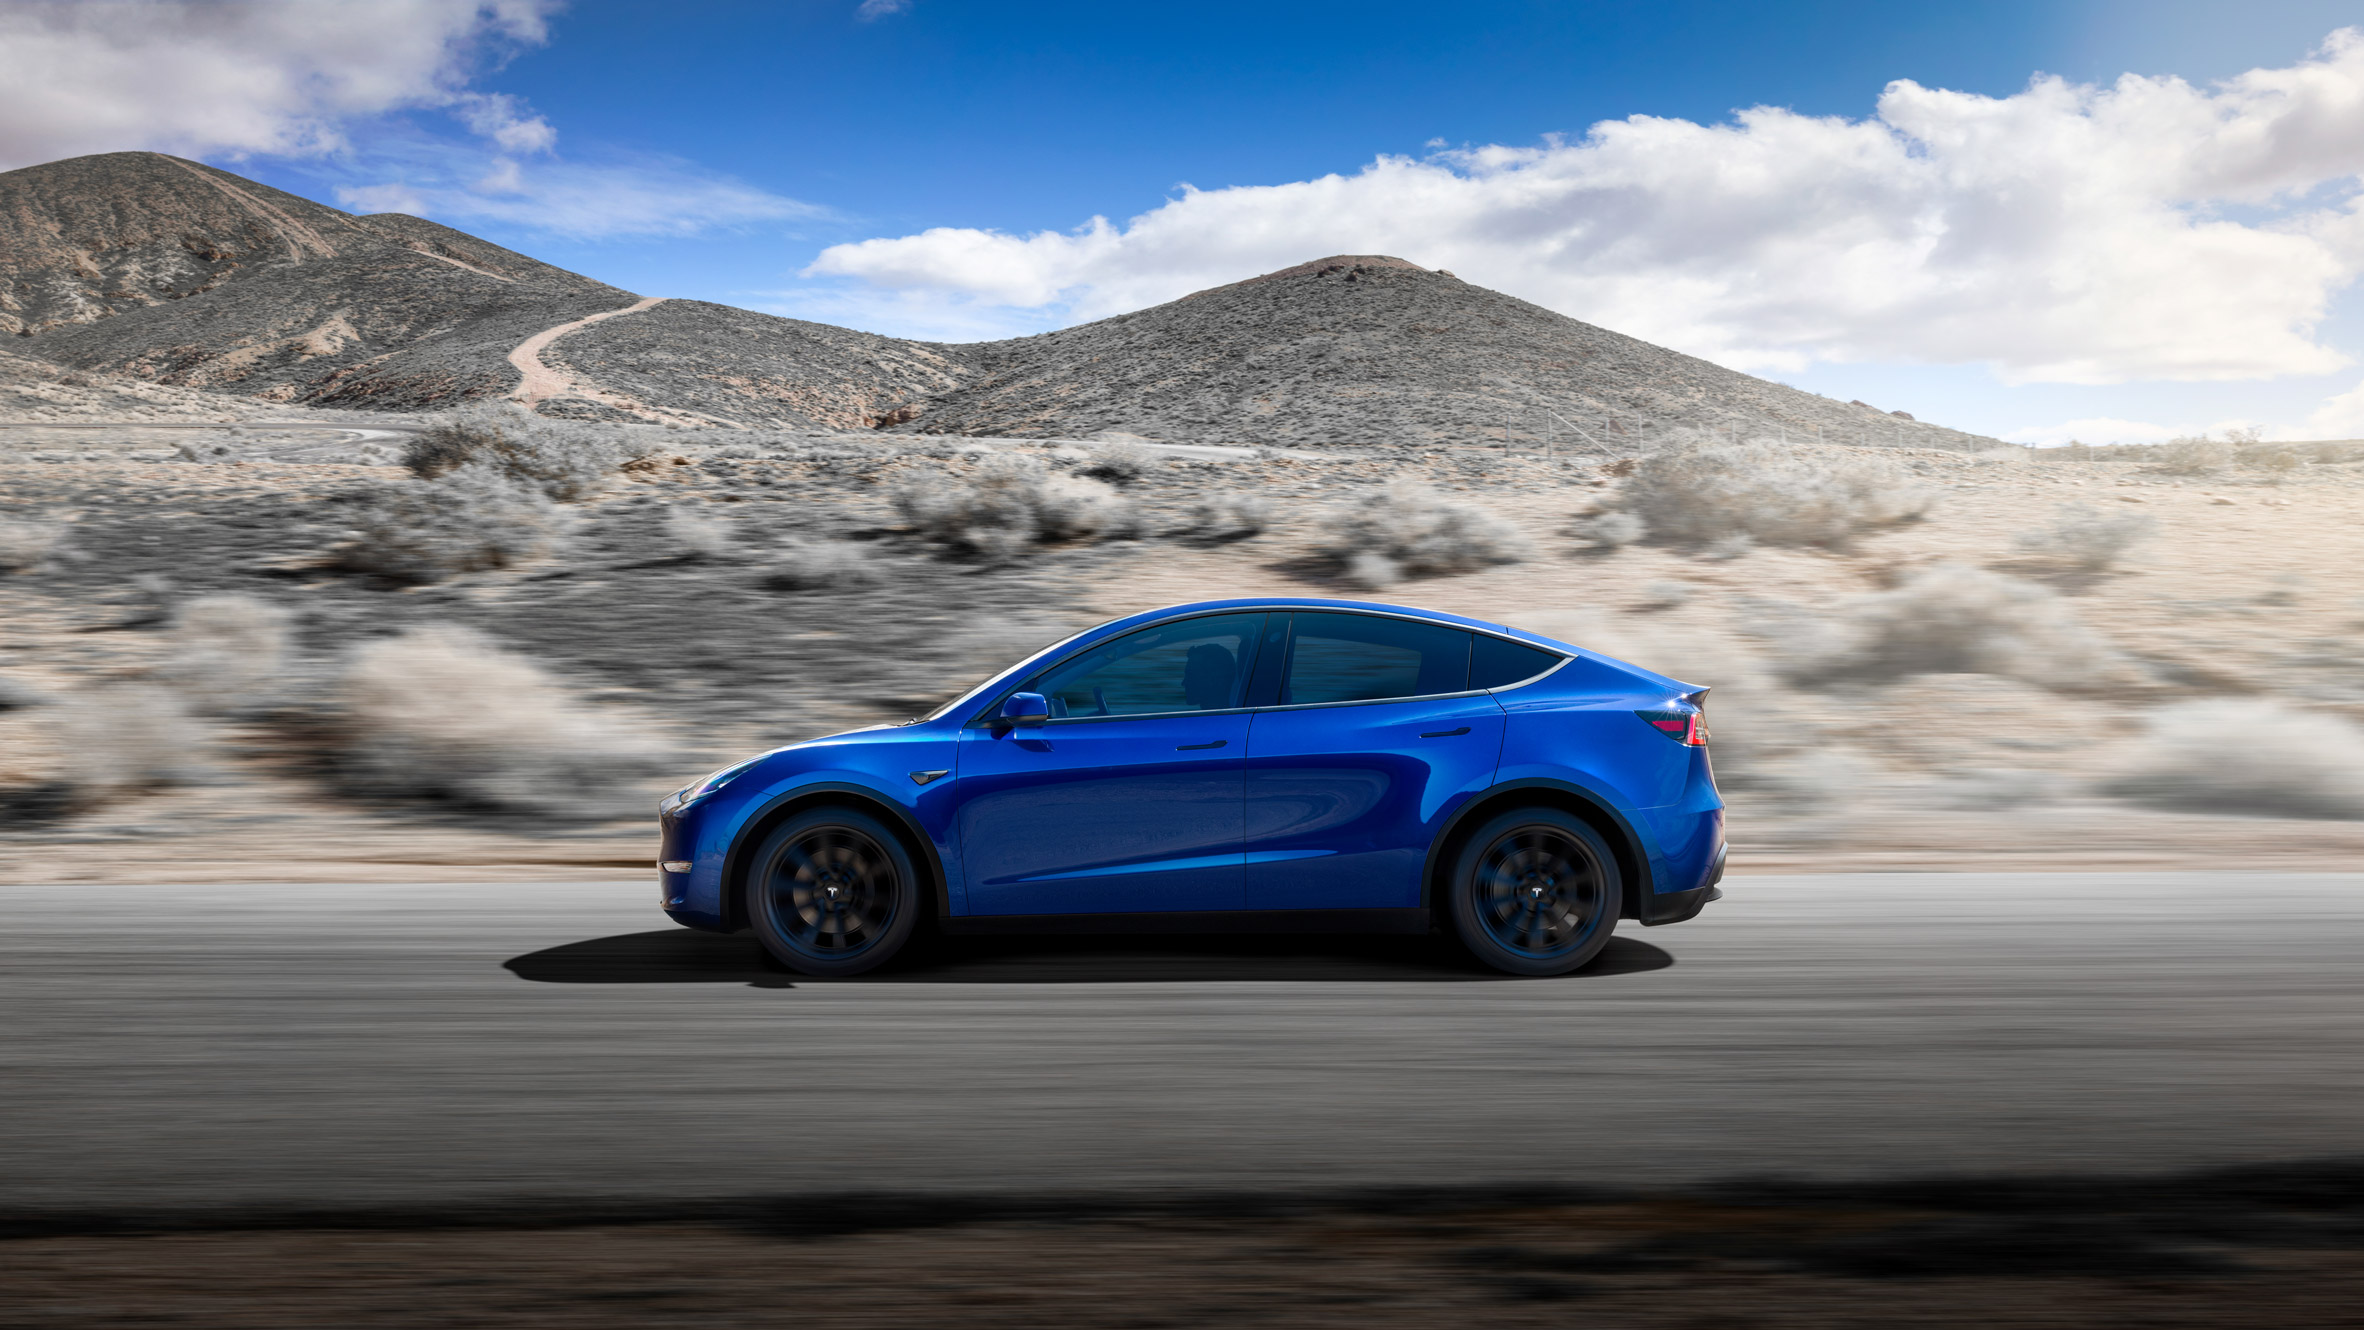 Tesla reveals latest Model Y electric SUV